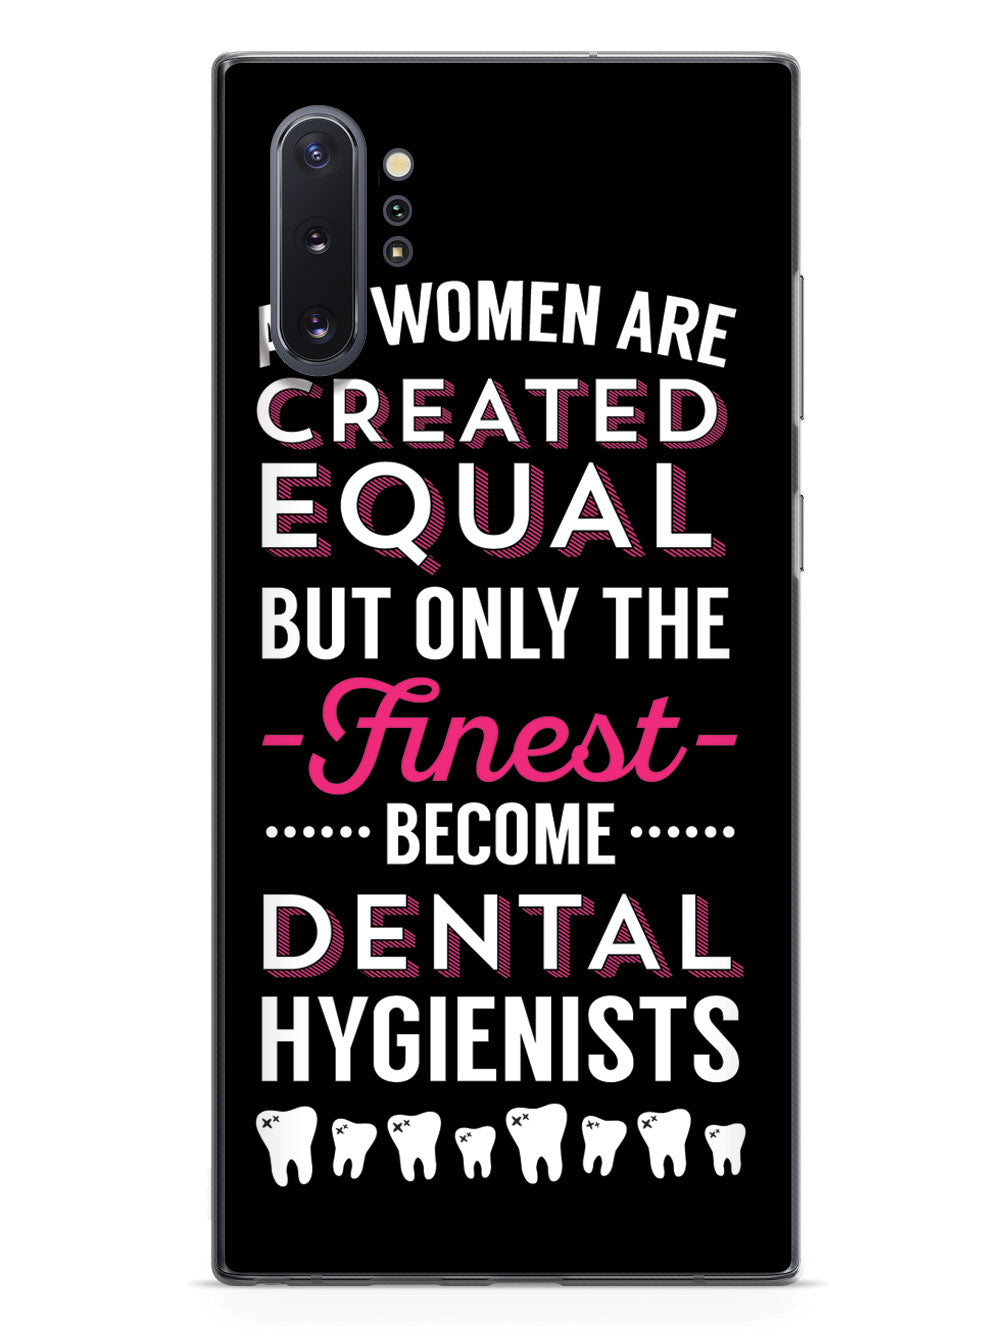 Only The Finest - Dental Hygienists Case